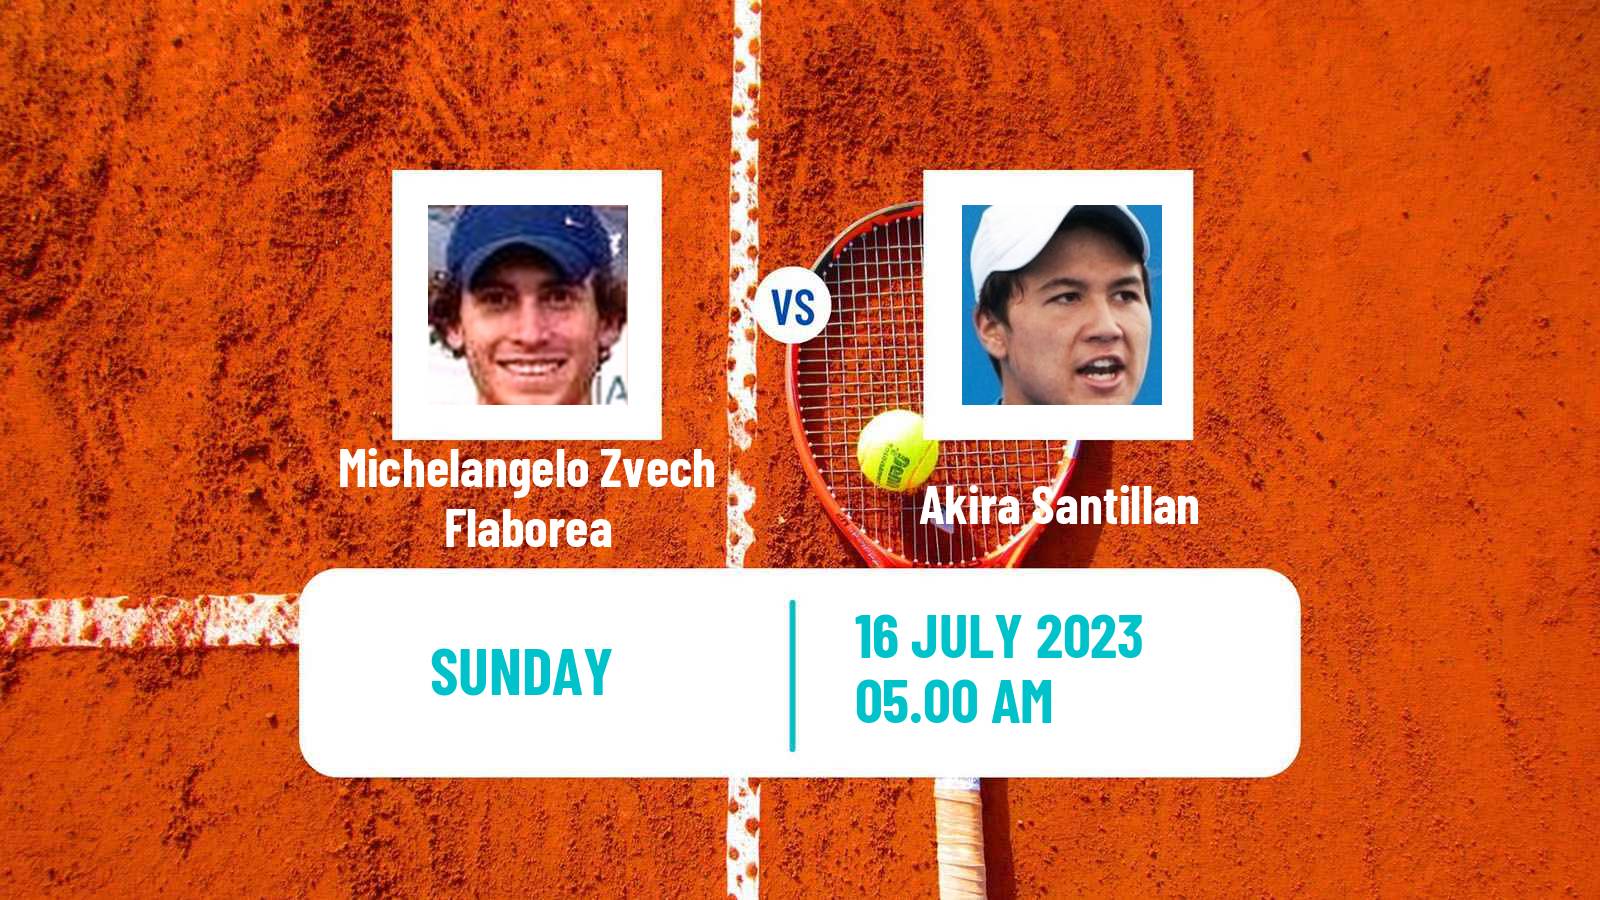 Tennis Trieste Challenger Men Michelangelo Zvech Flaborea - Akira Santillan